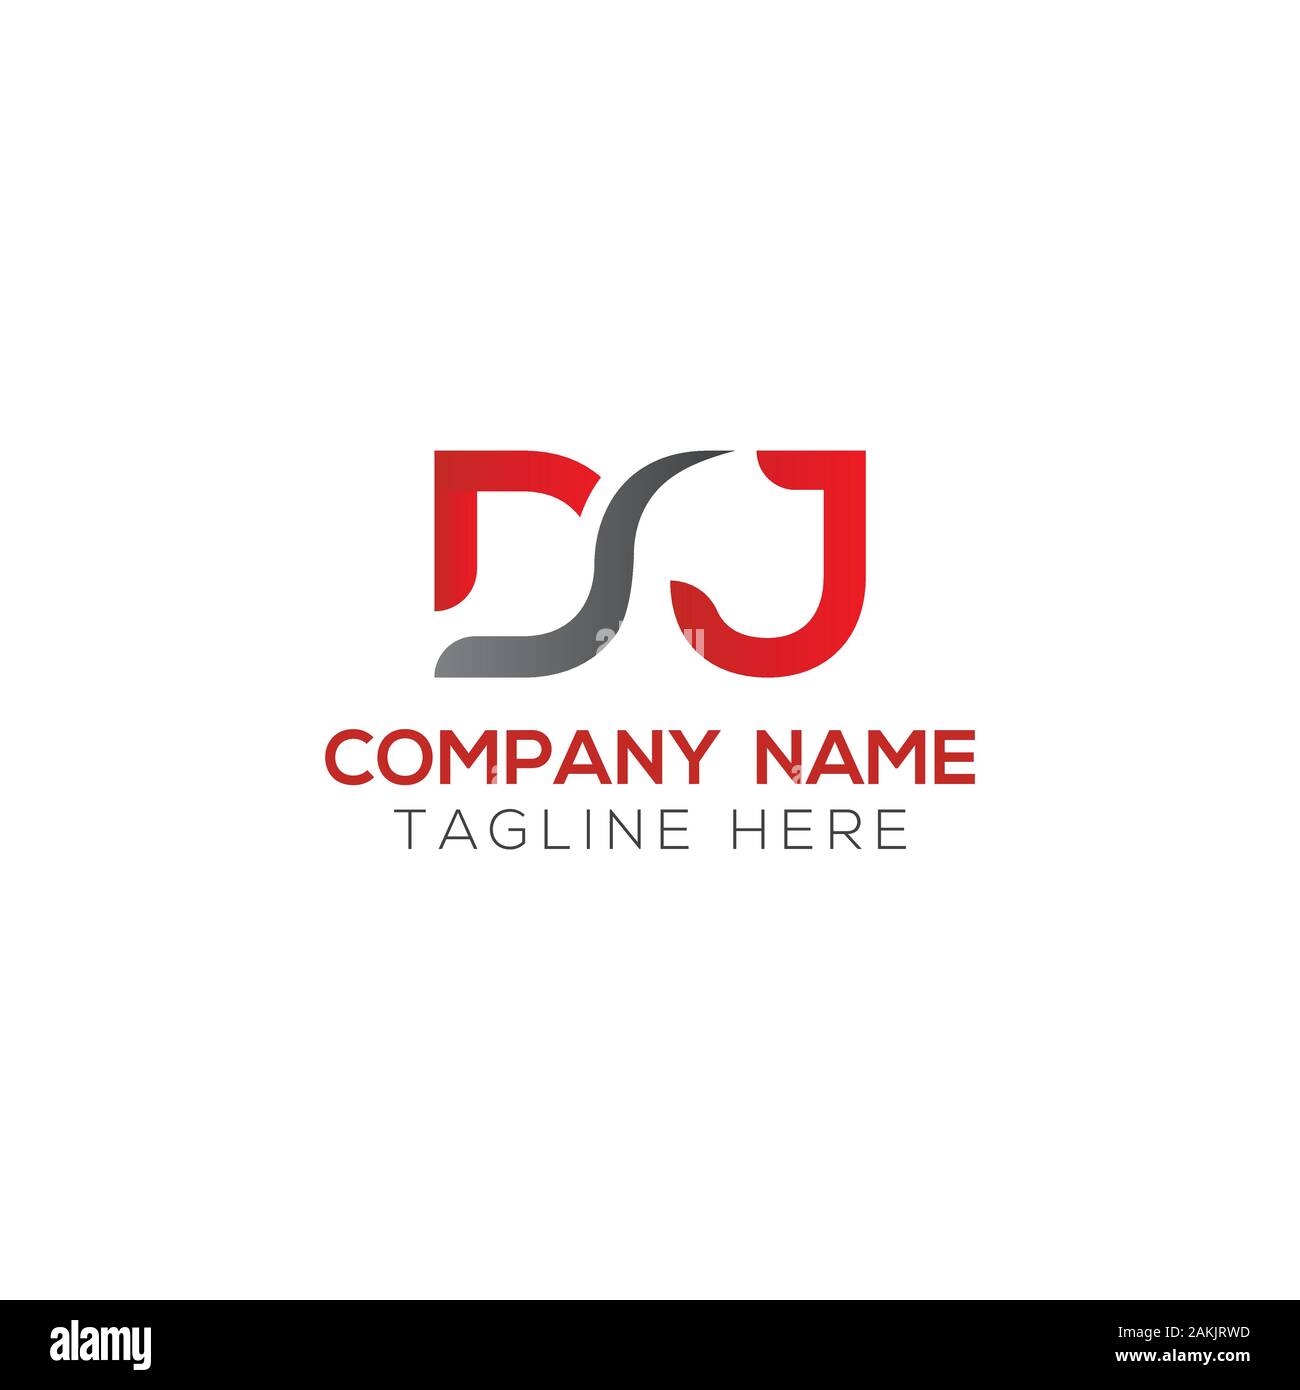 Dj logo hi-res stock photography and images - Alamy